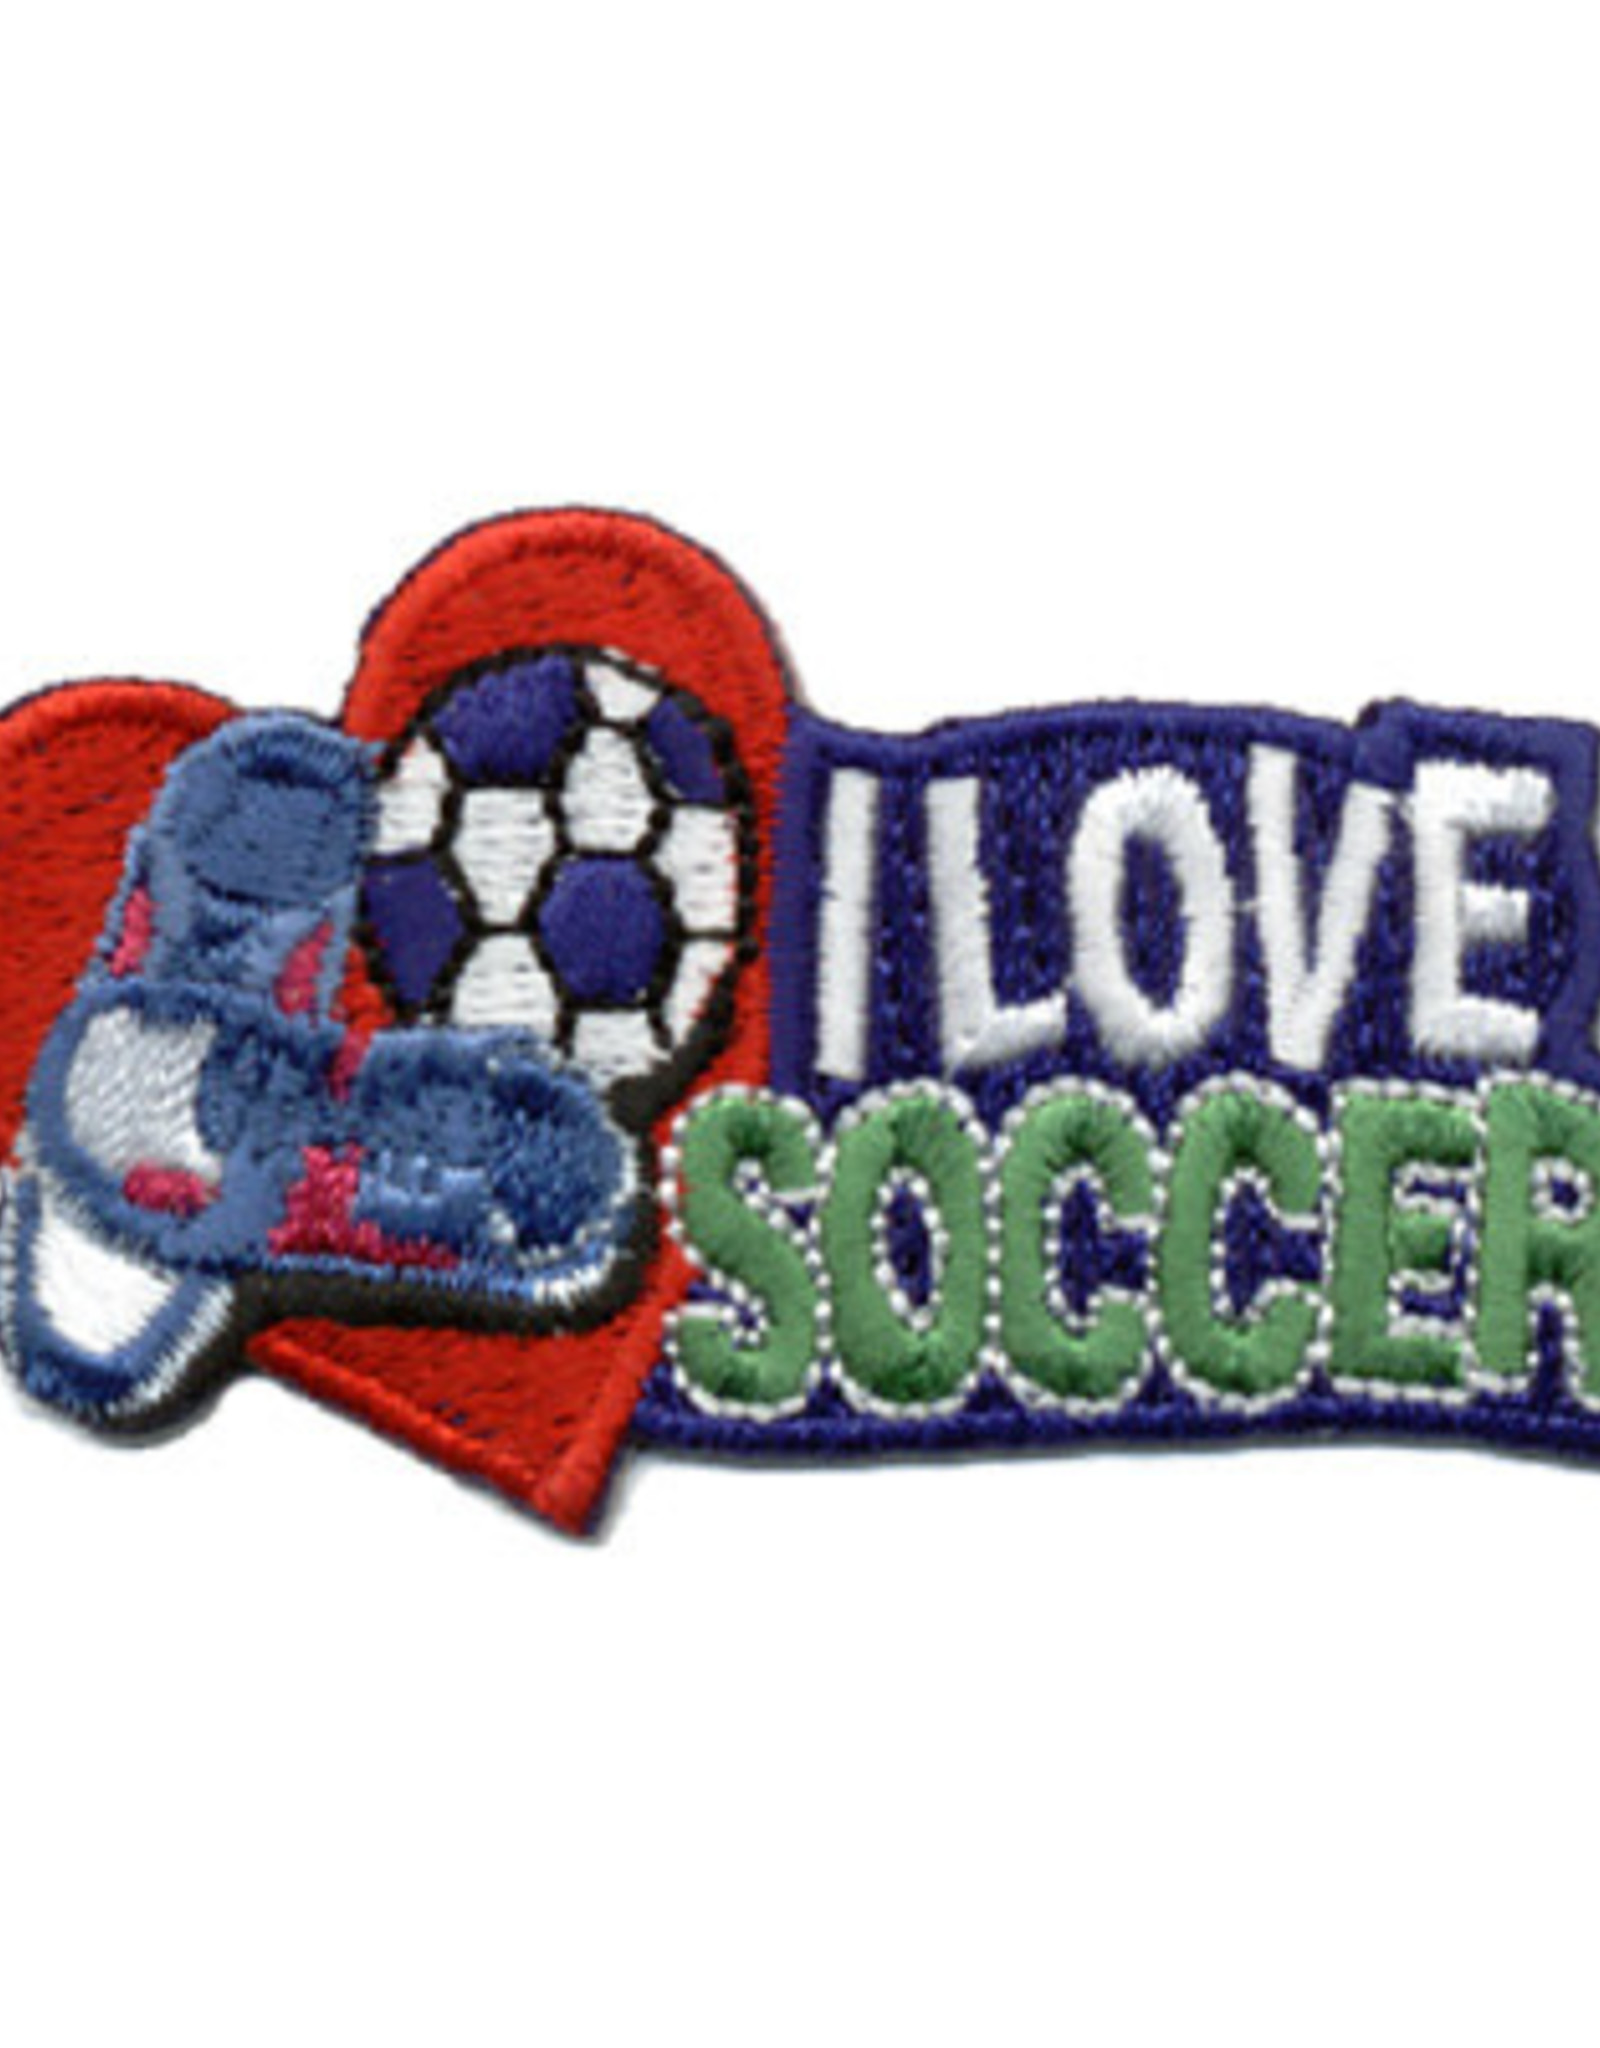 Advantage Emblem & Screen Prnt I Love Soccer Fun Patch